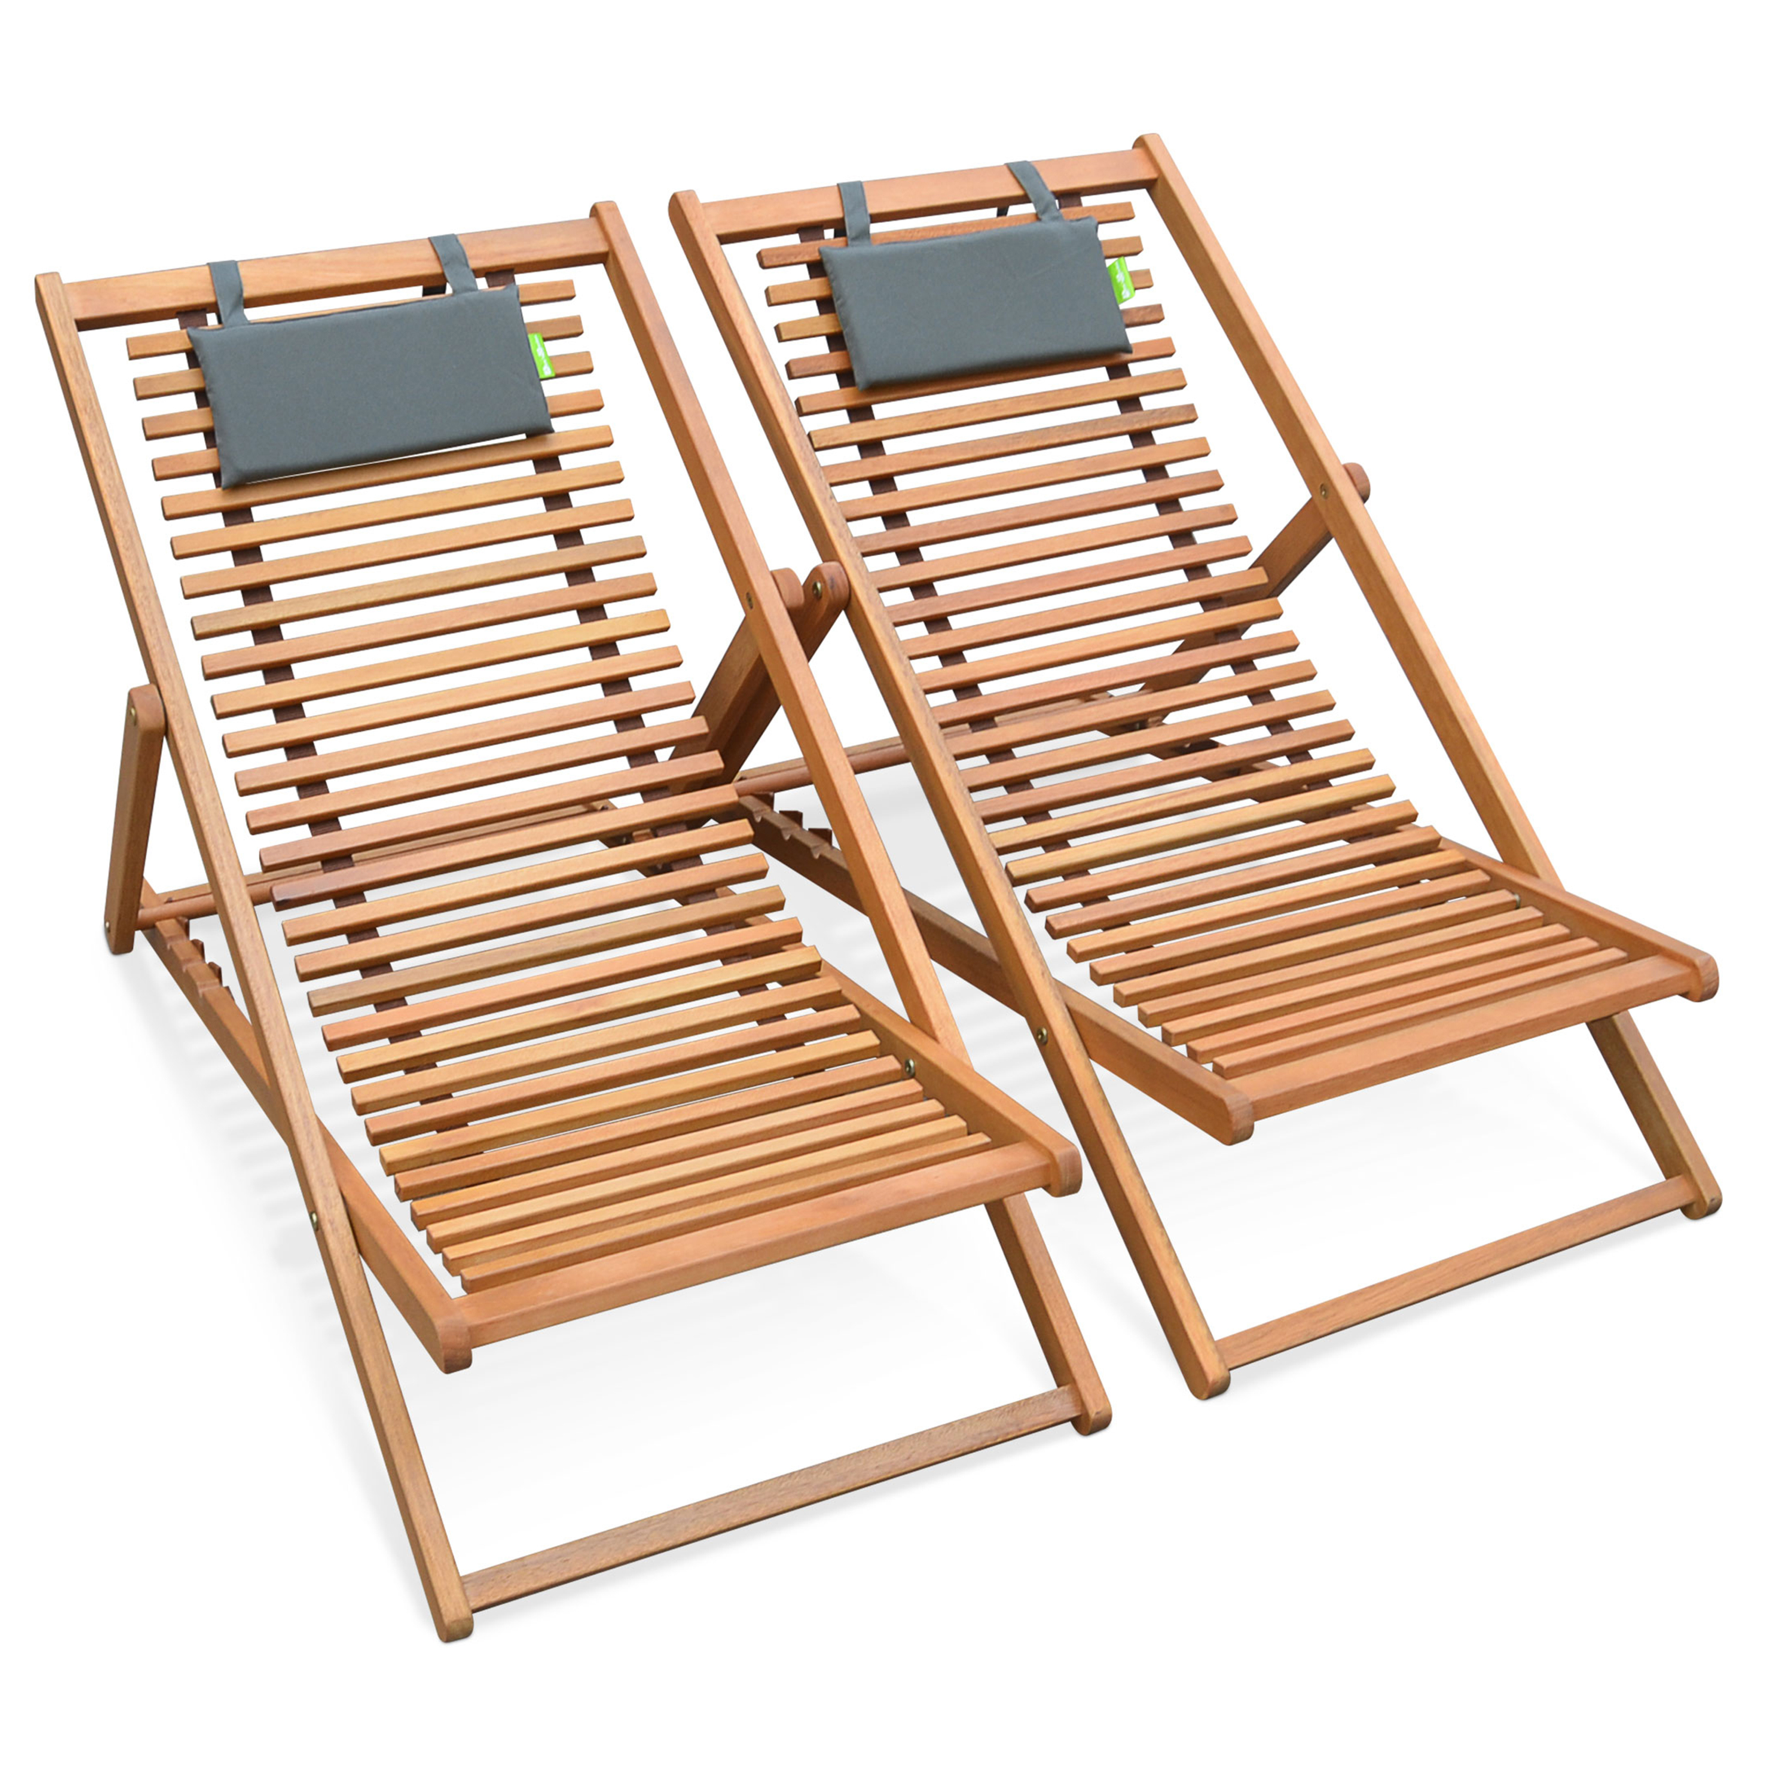 Bilbao deck chairs - set of 2